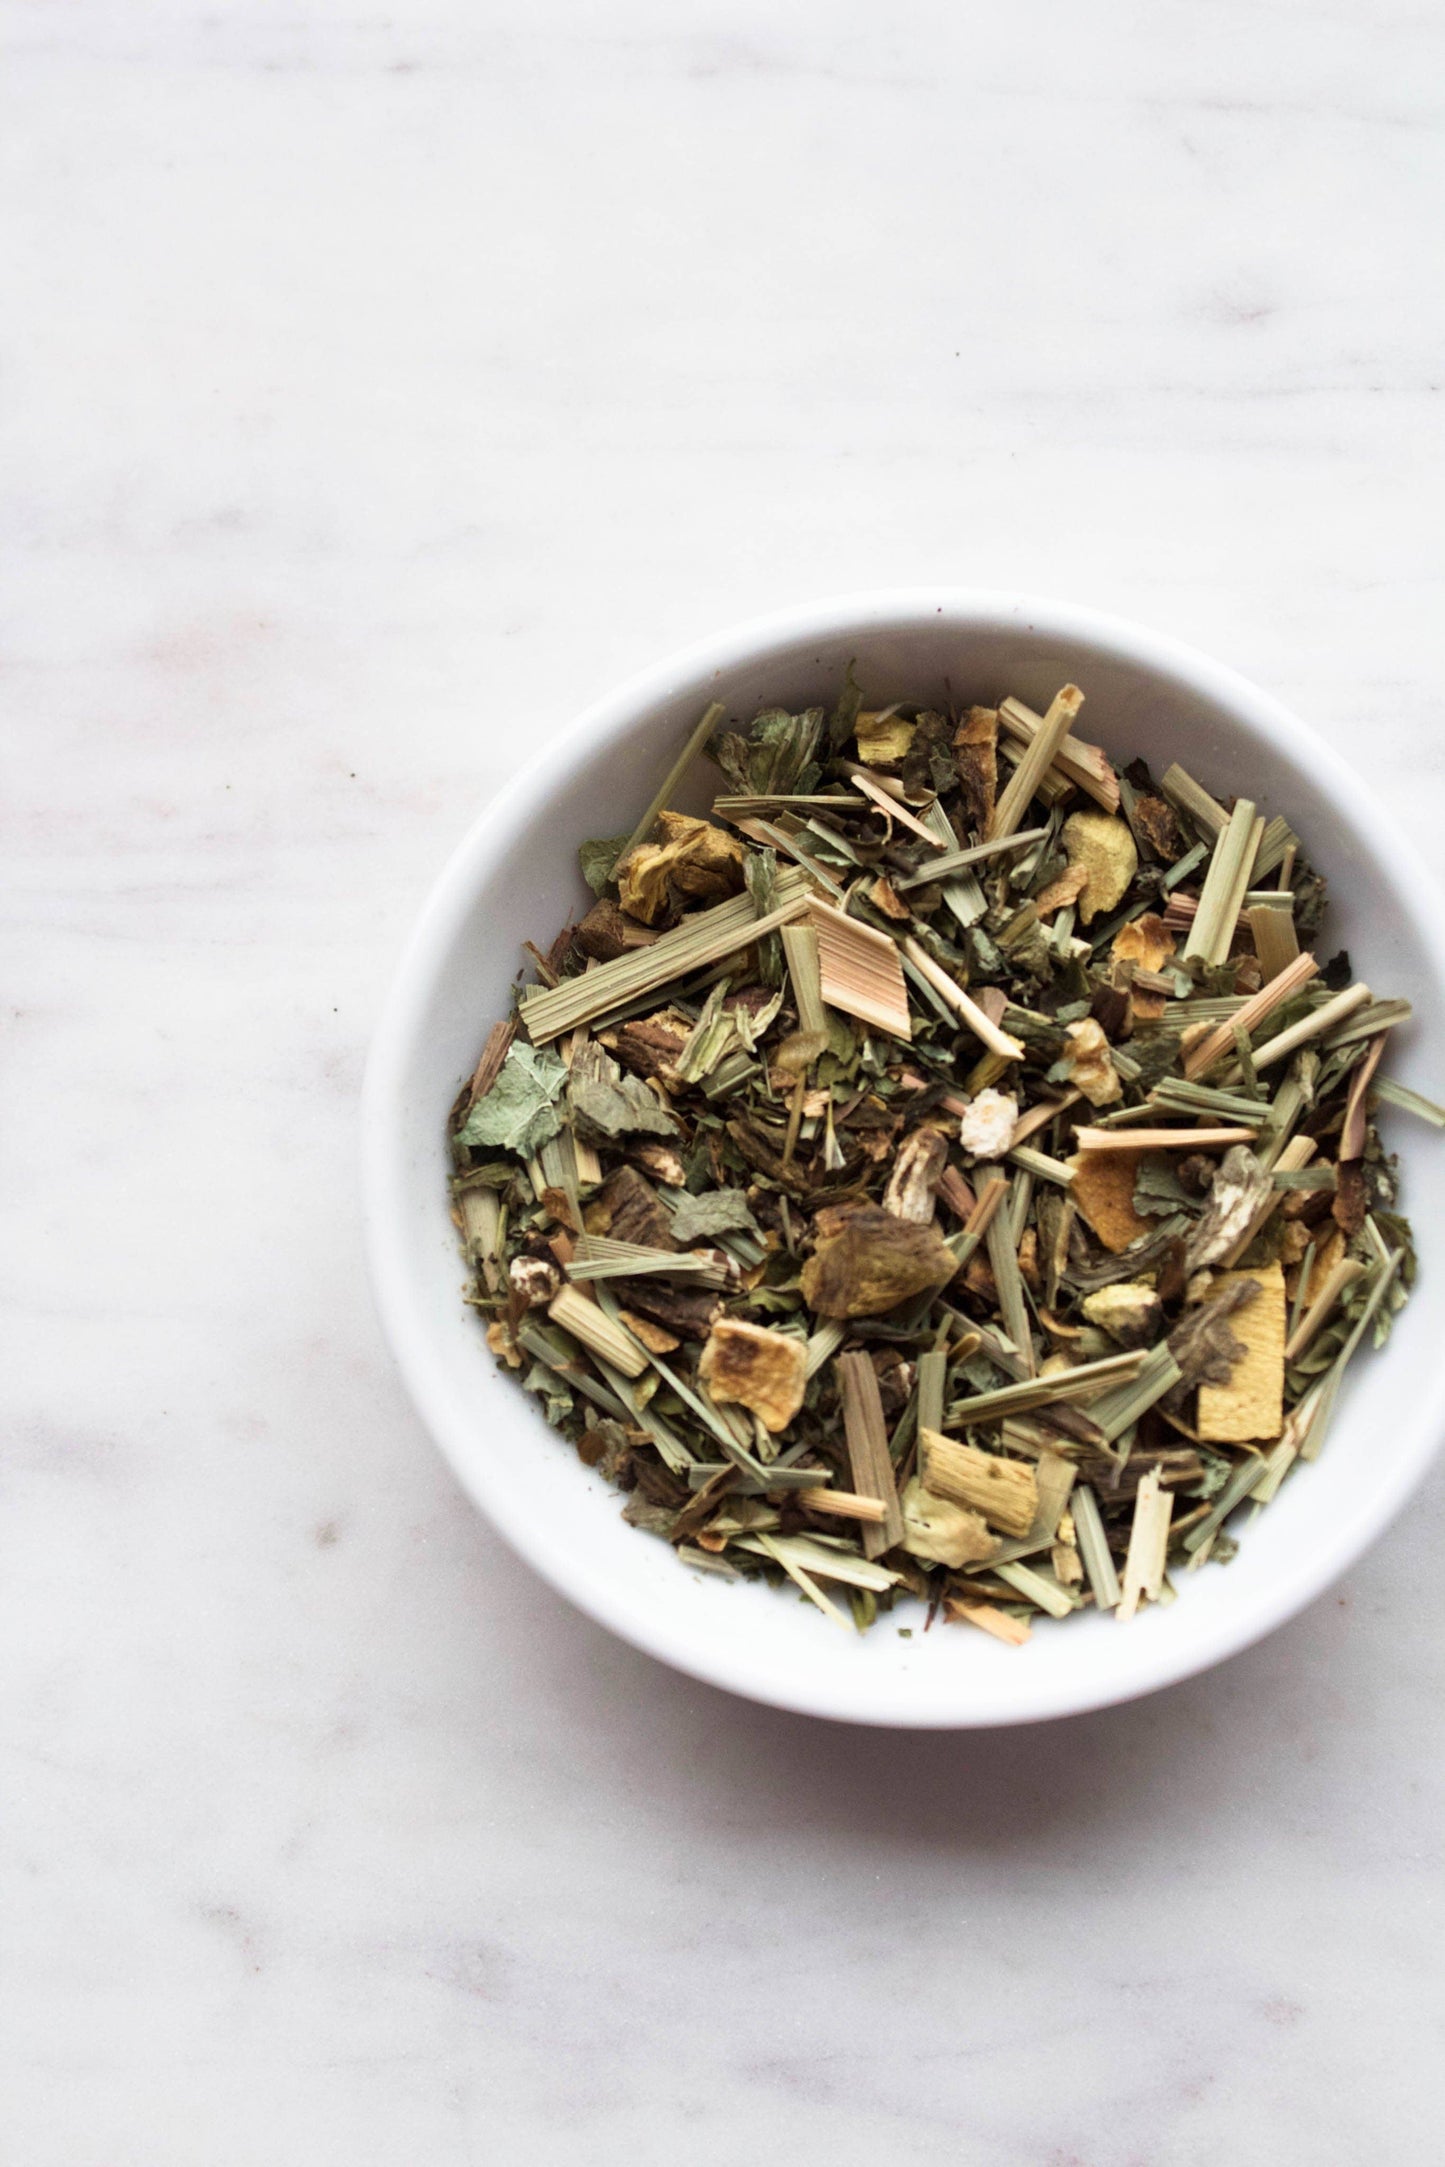 Gut Love - Superfood Tea: Plant-Based Pyramid Tea Bags - Pouch